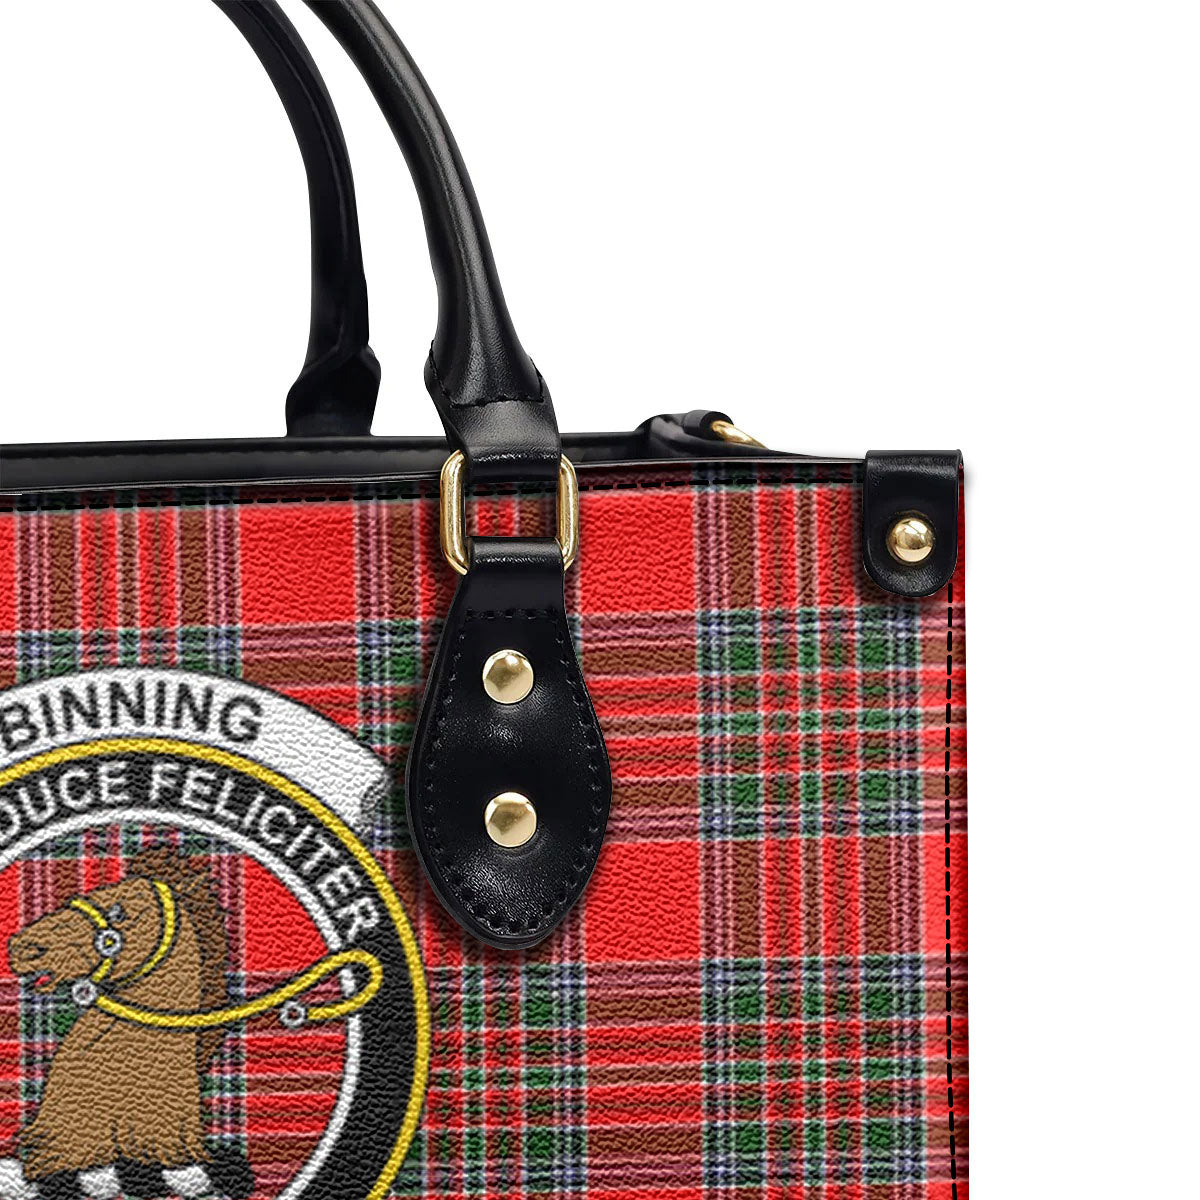 Binning (of Wallifoord) Tartan Crest Leather Handbag